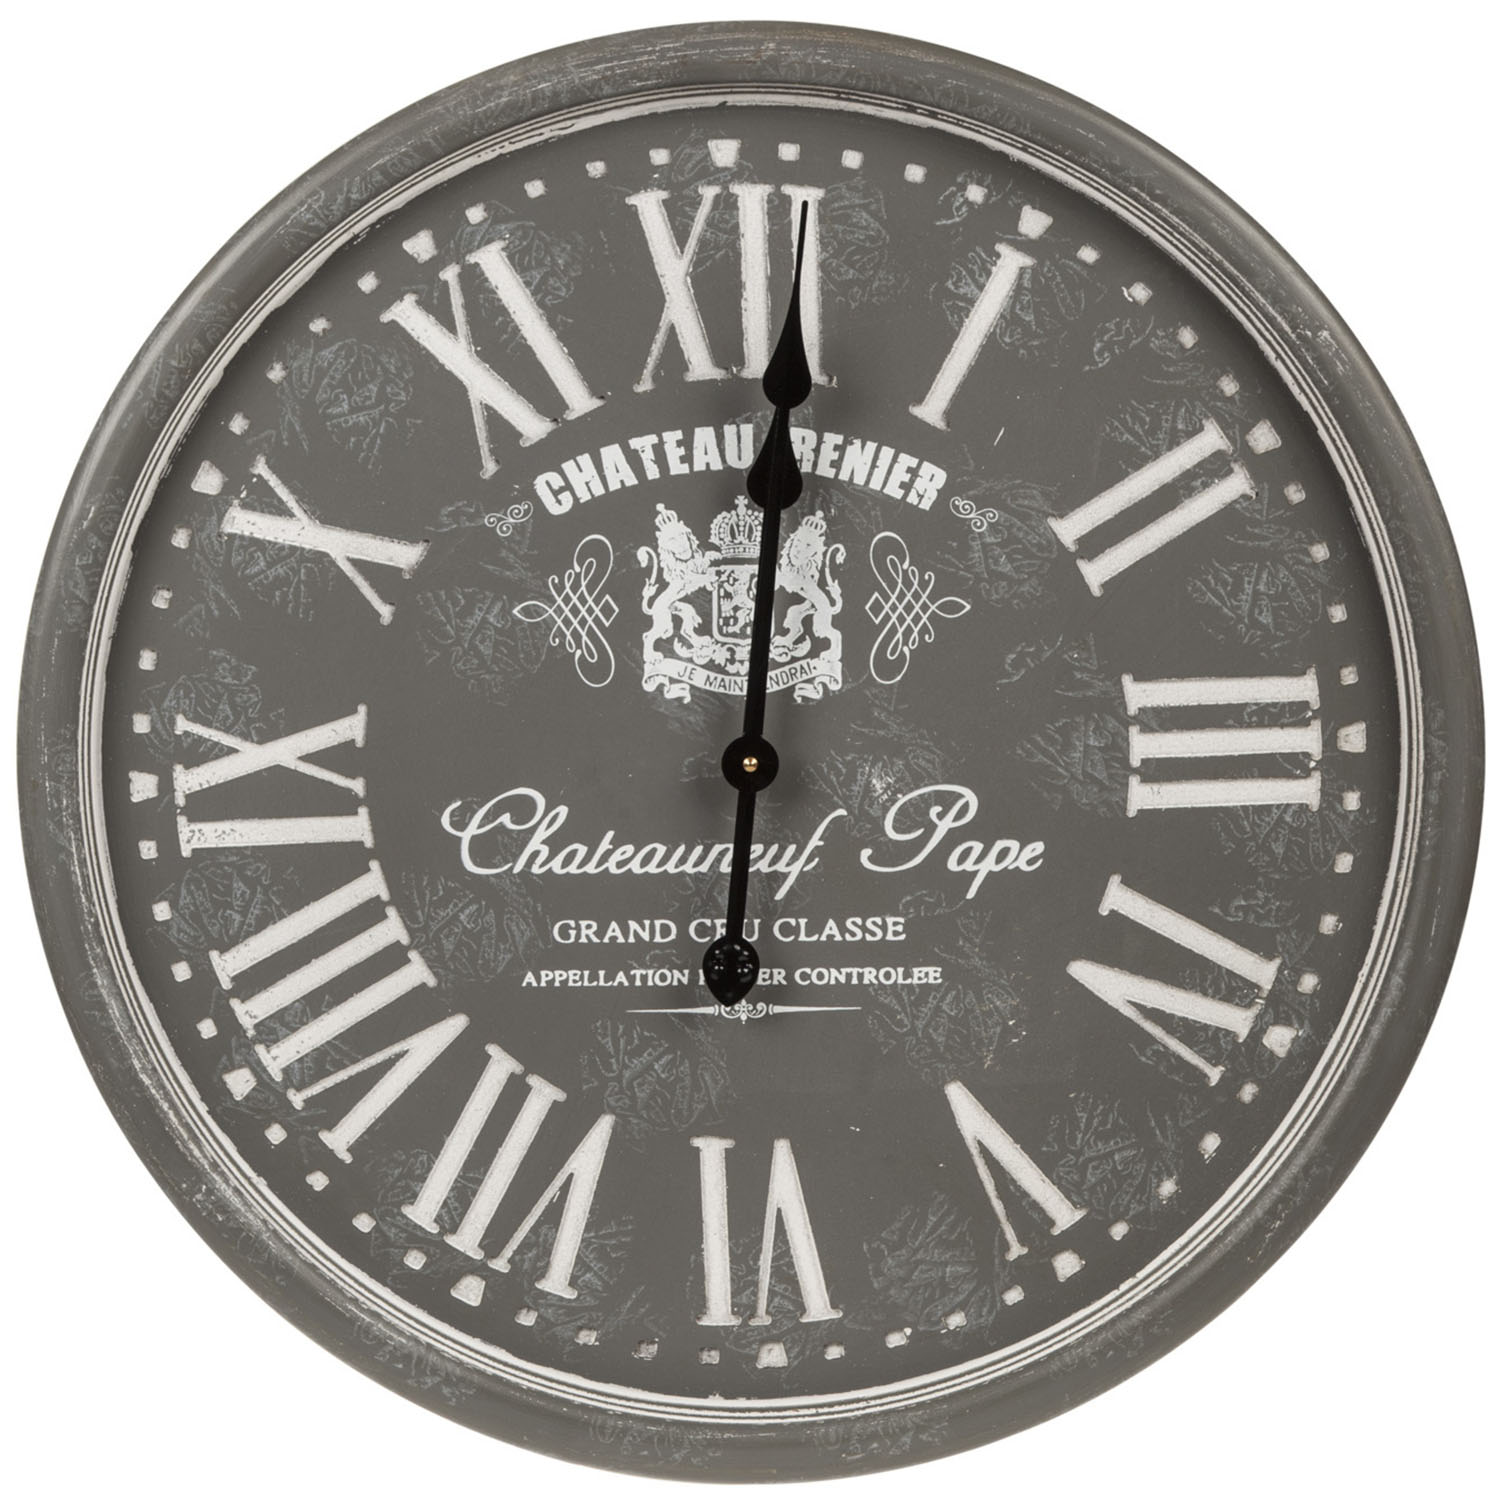 Grey Chateau Renier Wall Clock Image 1